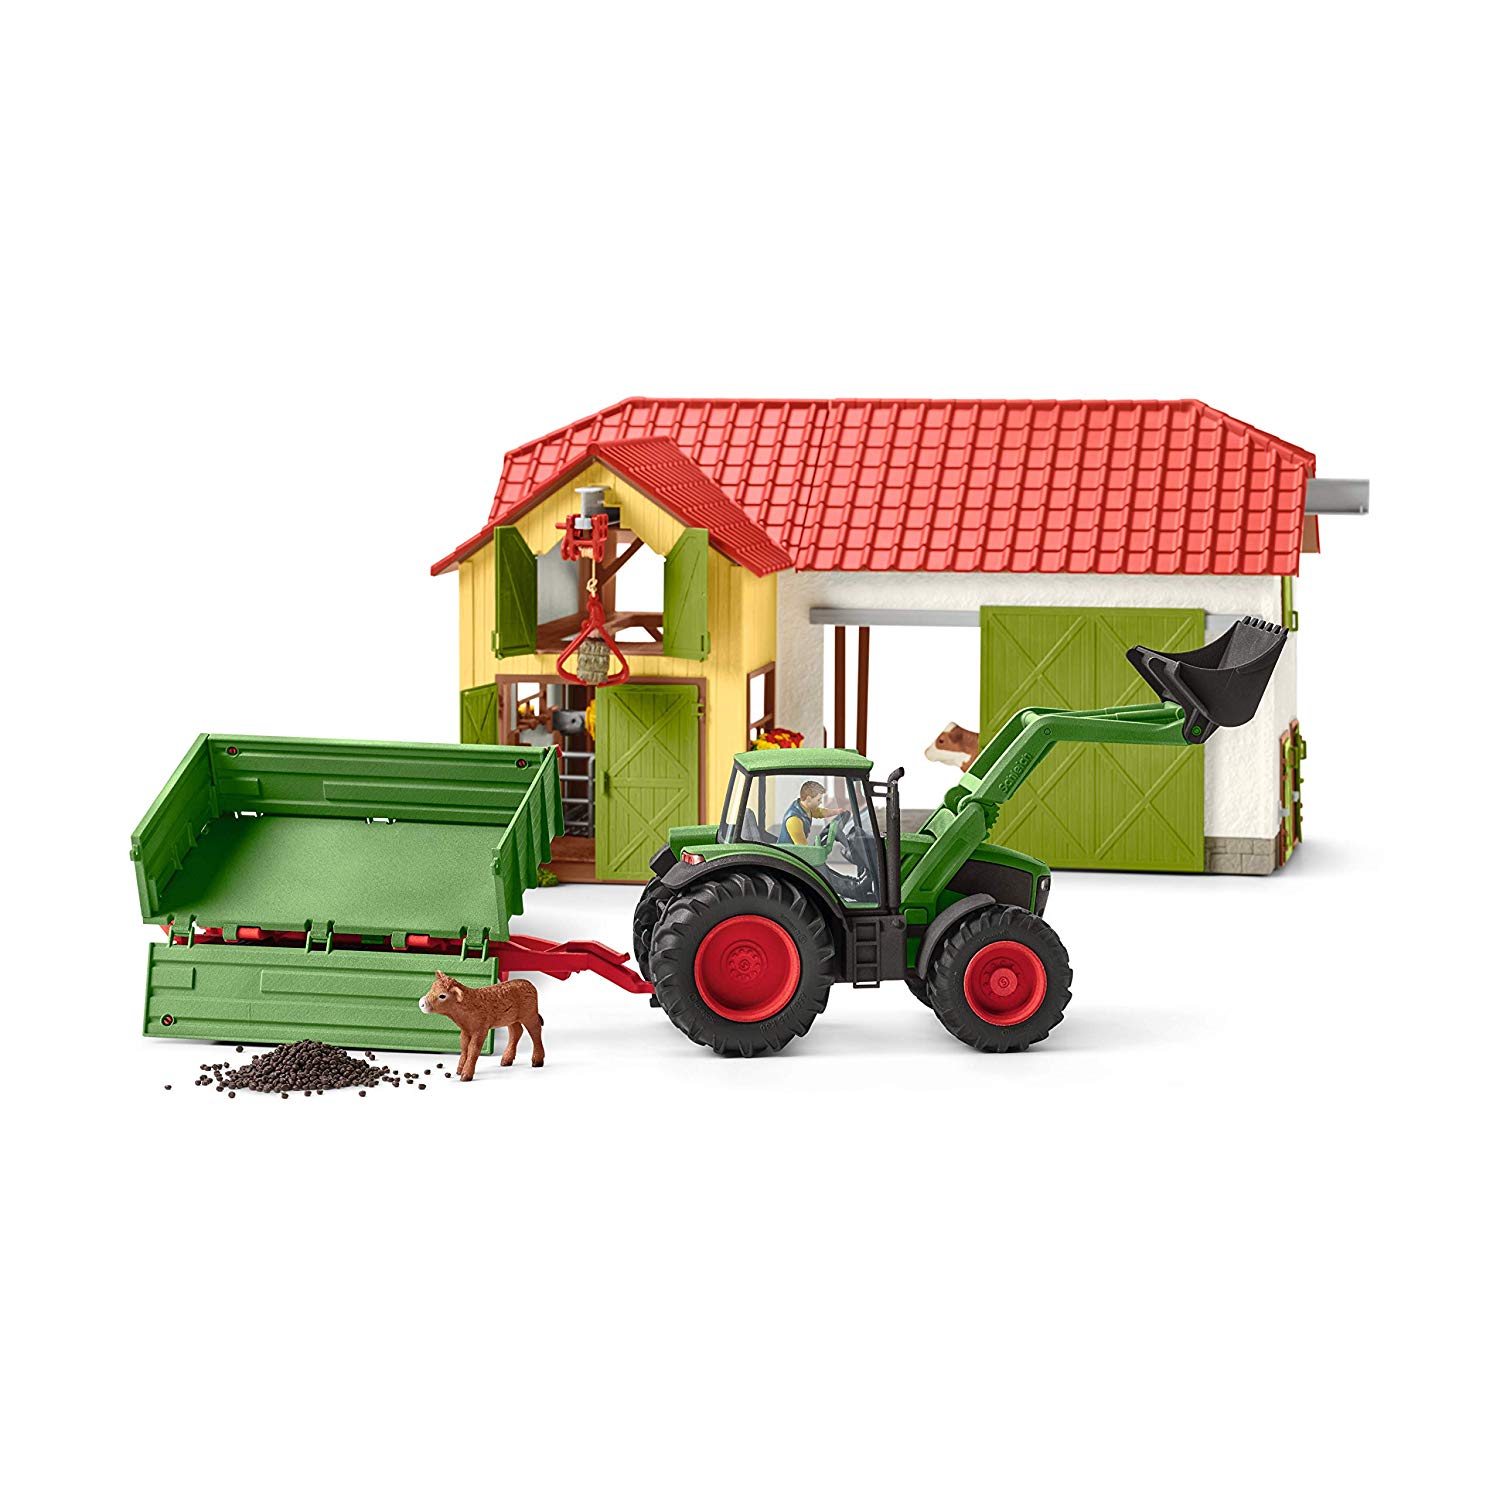 Schleich 42379 –Tractor With Trailer Toy